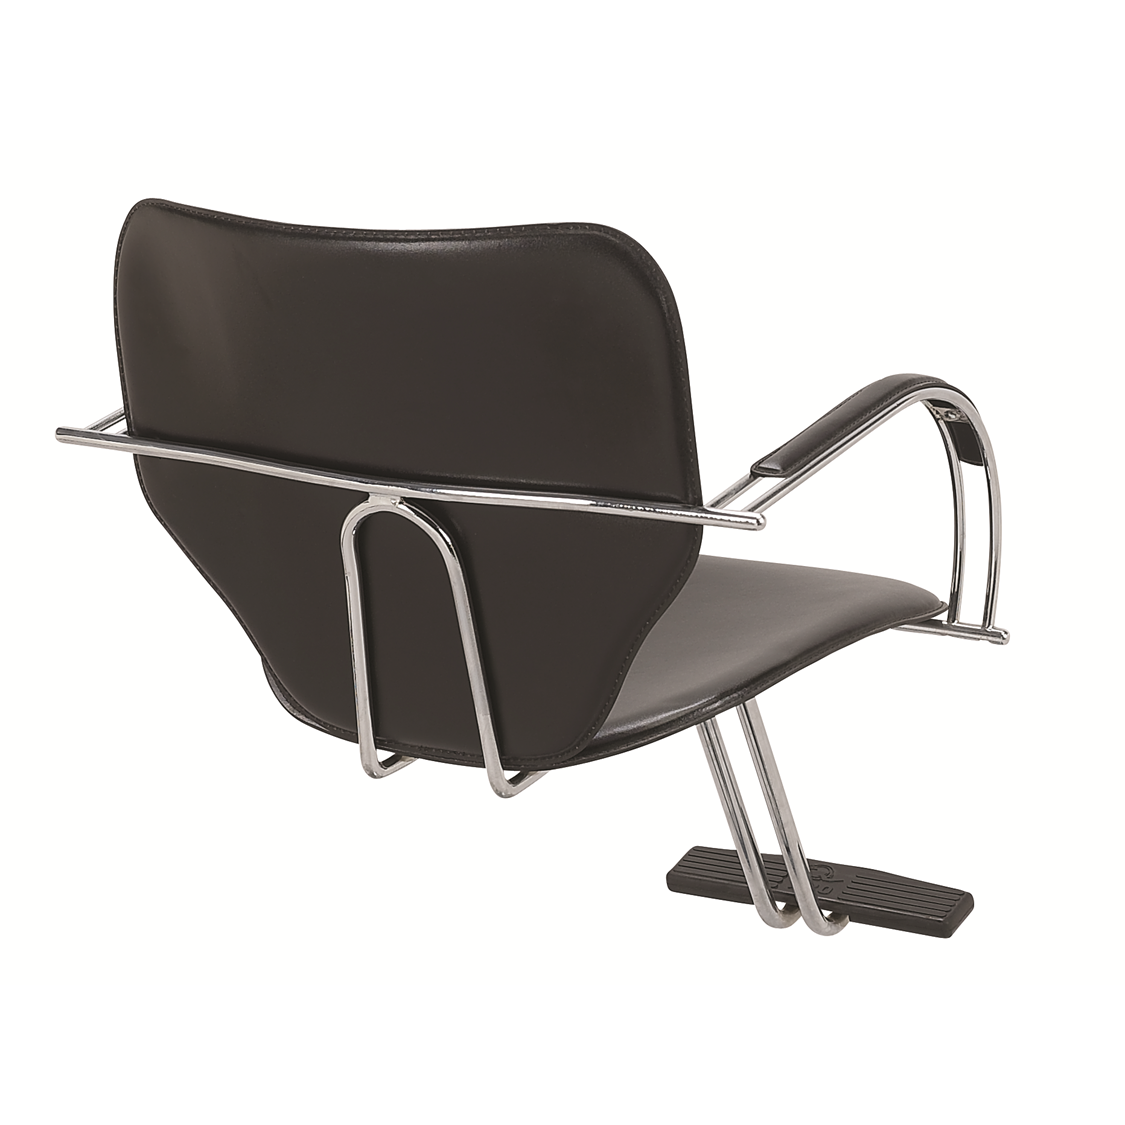 Ardon Salon Styling Chair - Garfield Commercial Enterprises Salon Equipment Spa Furniture Barber Chair Luxury